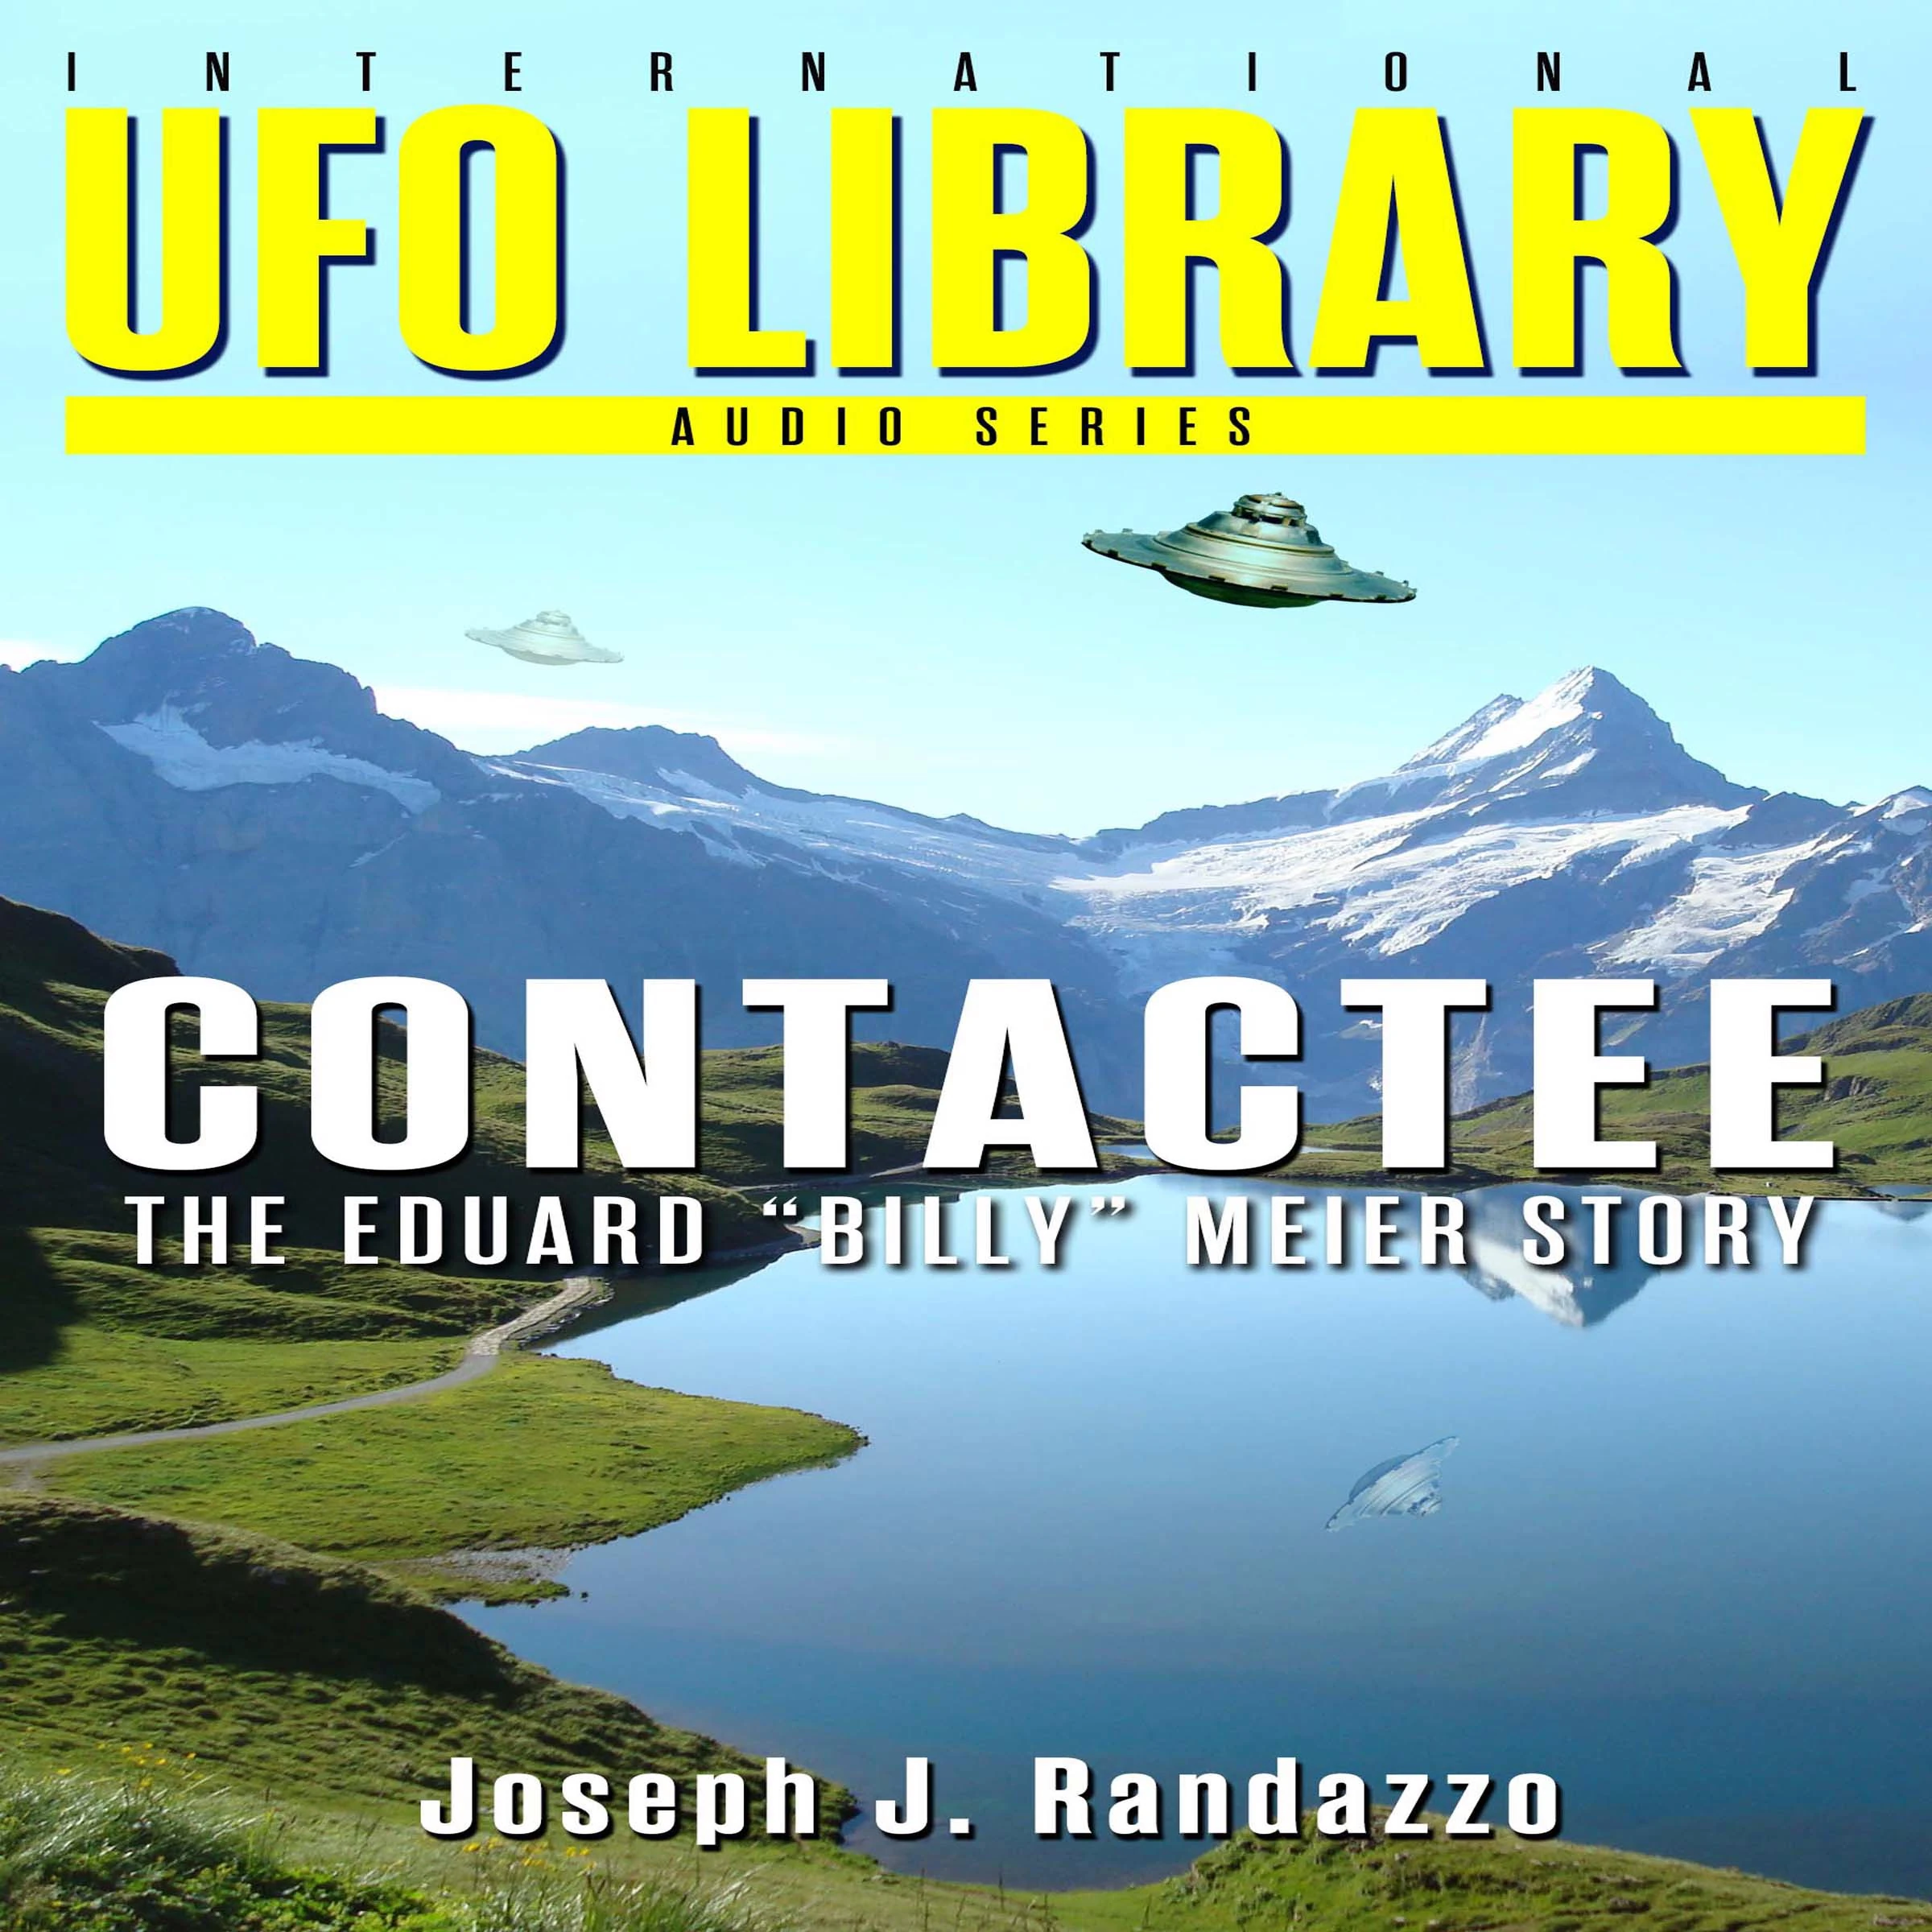 U.F.O LIBRARY - CONTACTEE: The Eduard “Billy” Meier Story by Joseph J. Randazzo Audiobook